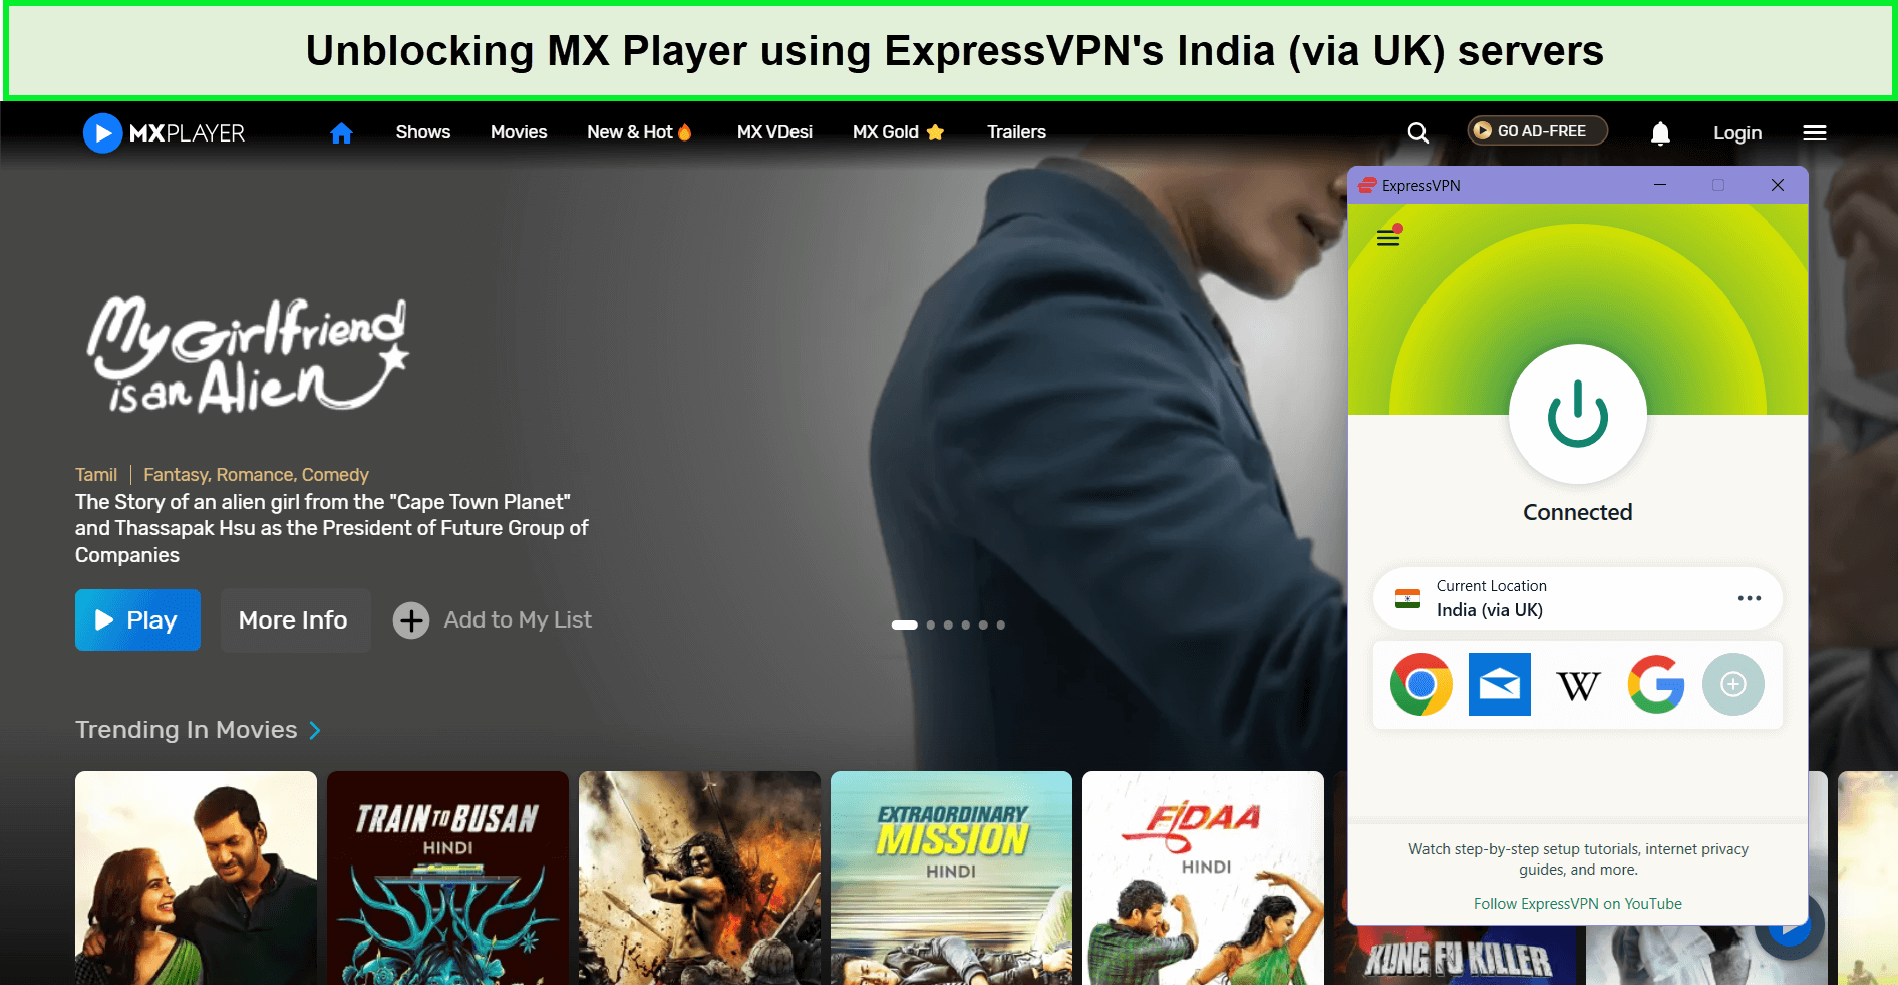 mx-player-in-India-unblocked-expressvpn